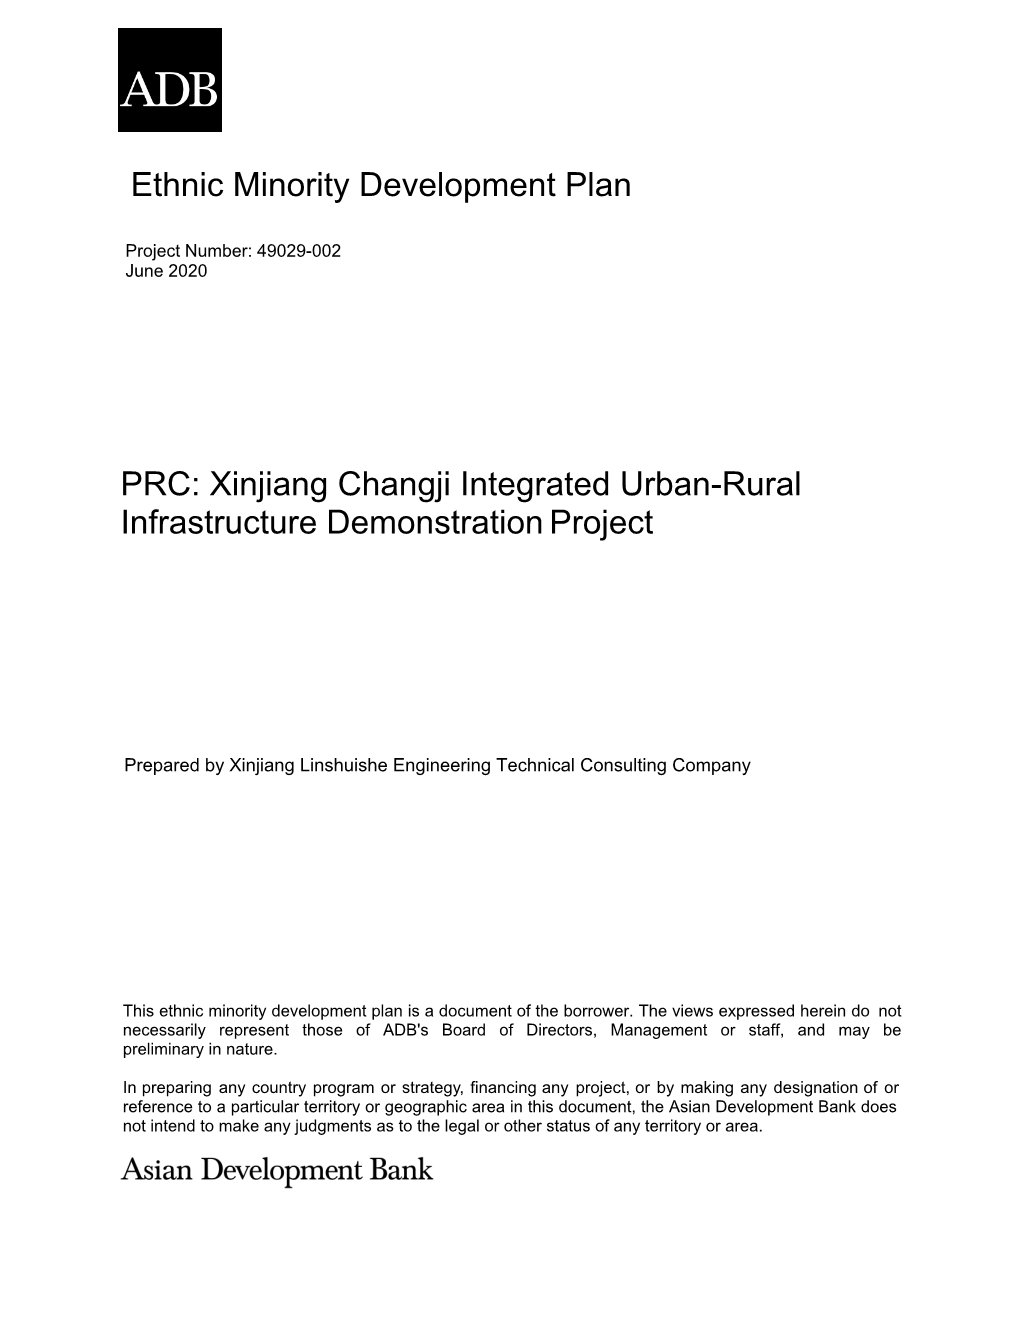 Xinjiang Changji Integrated Urban-Rural Infrastructure Demonstration Project